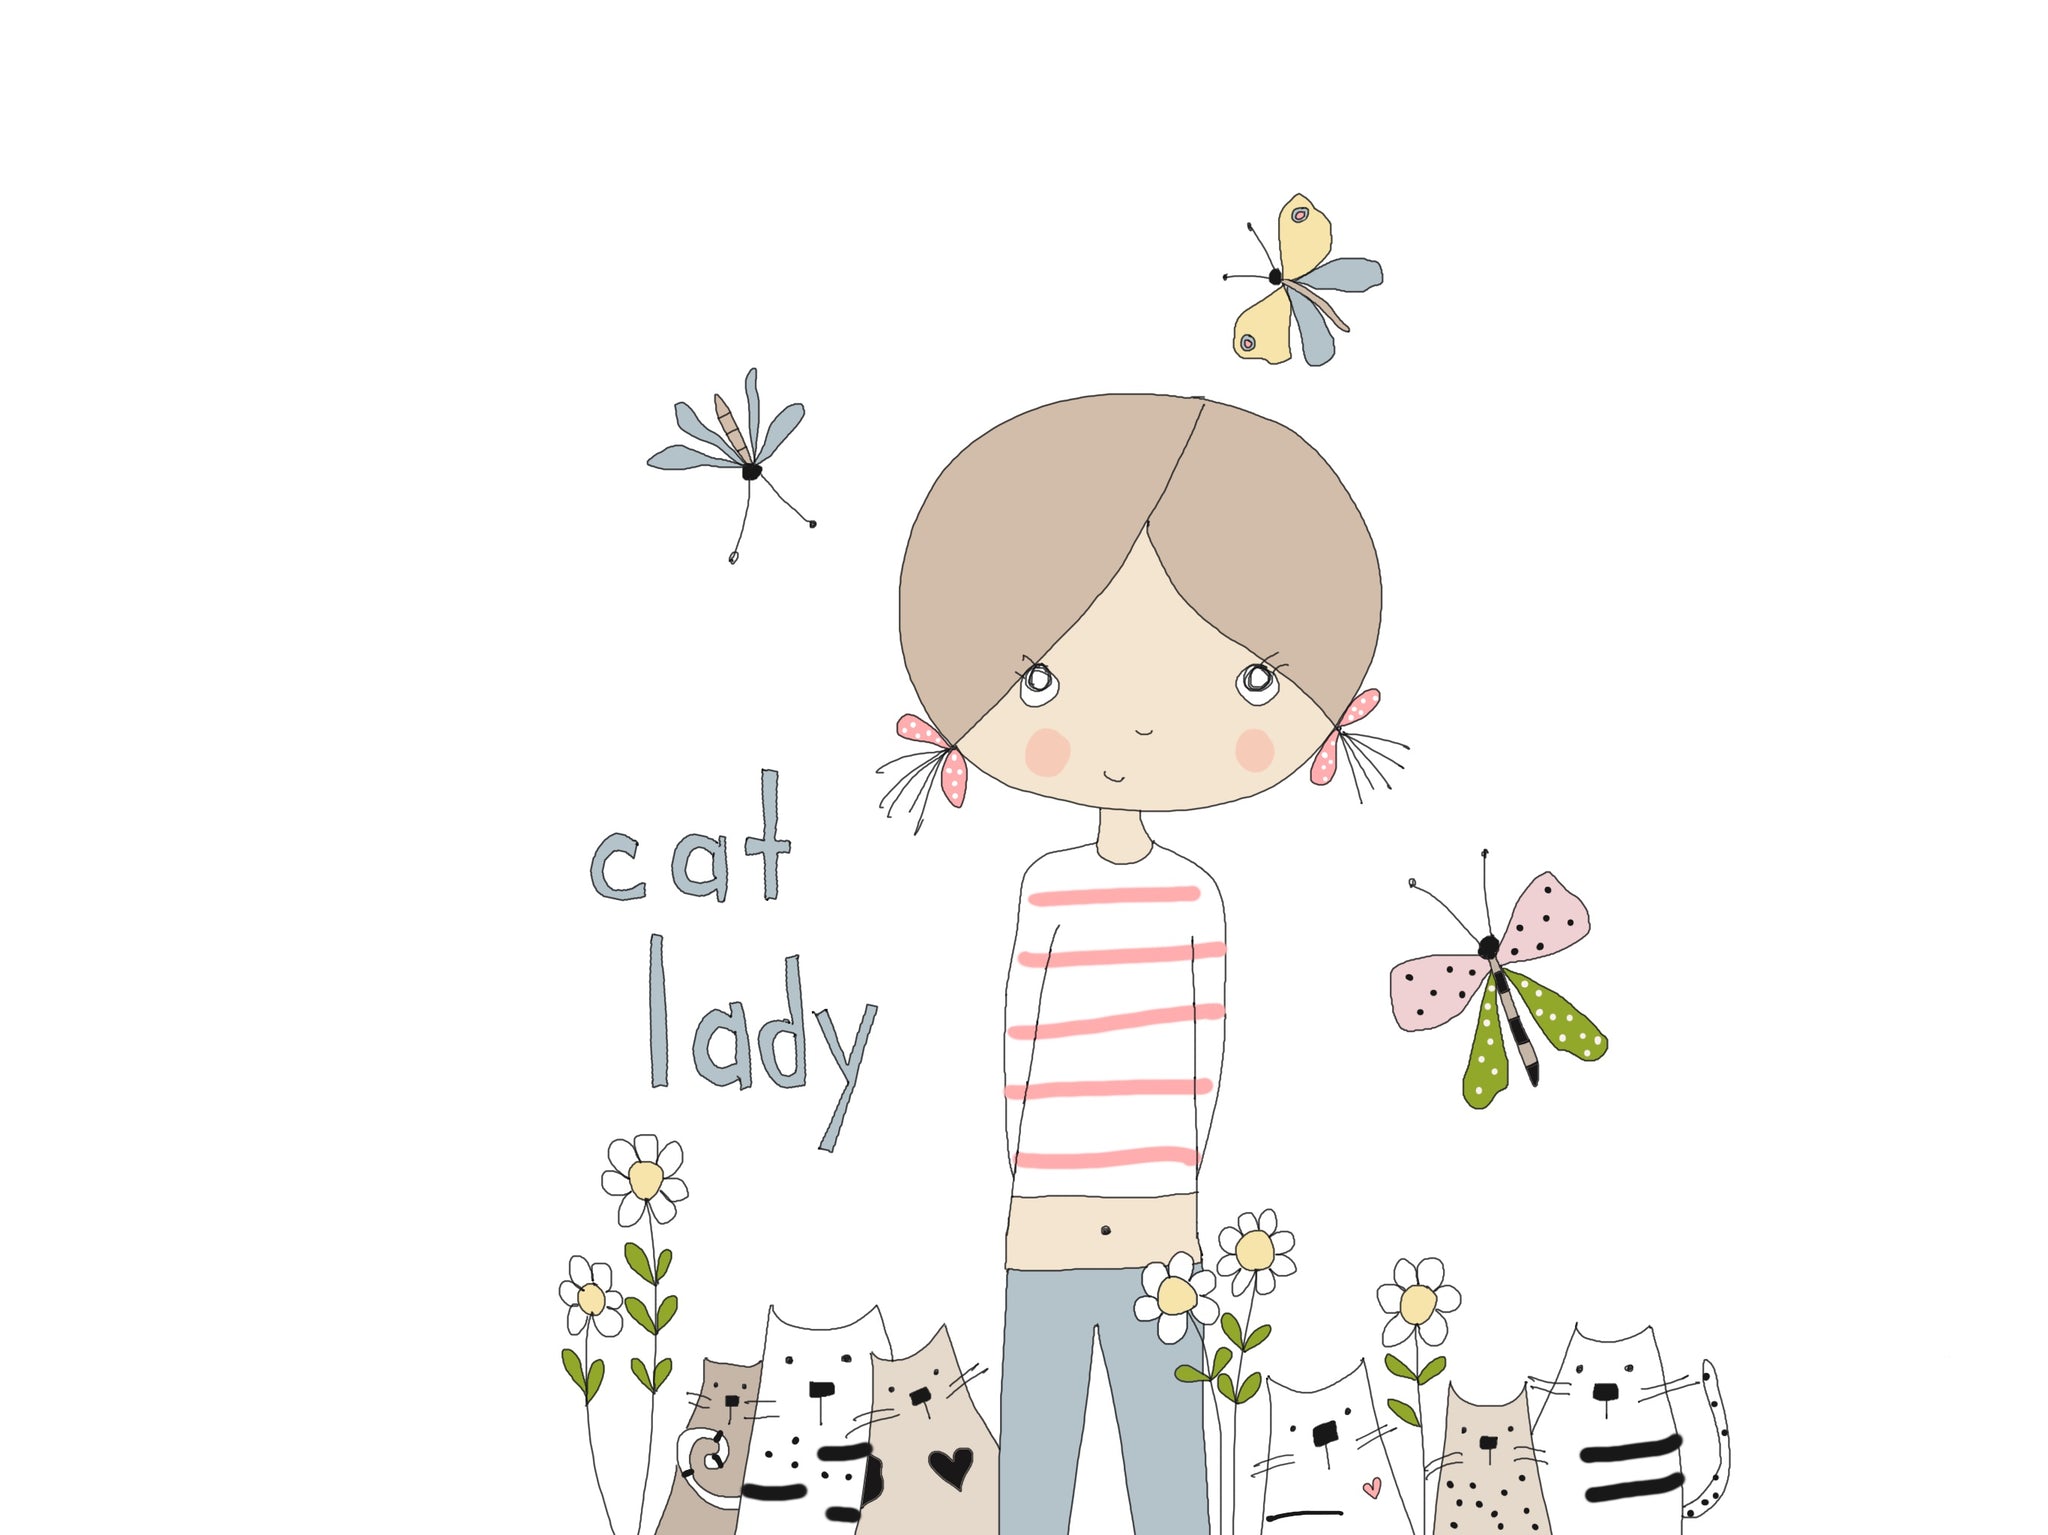 “Cat Lady’ greeting card